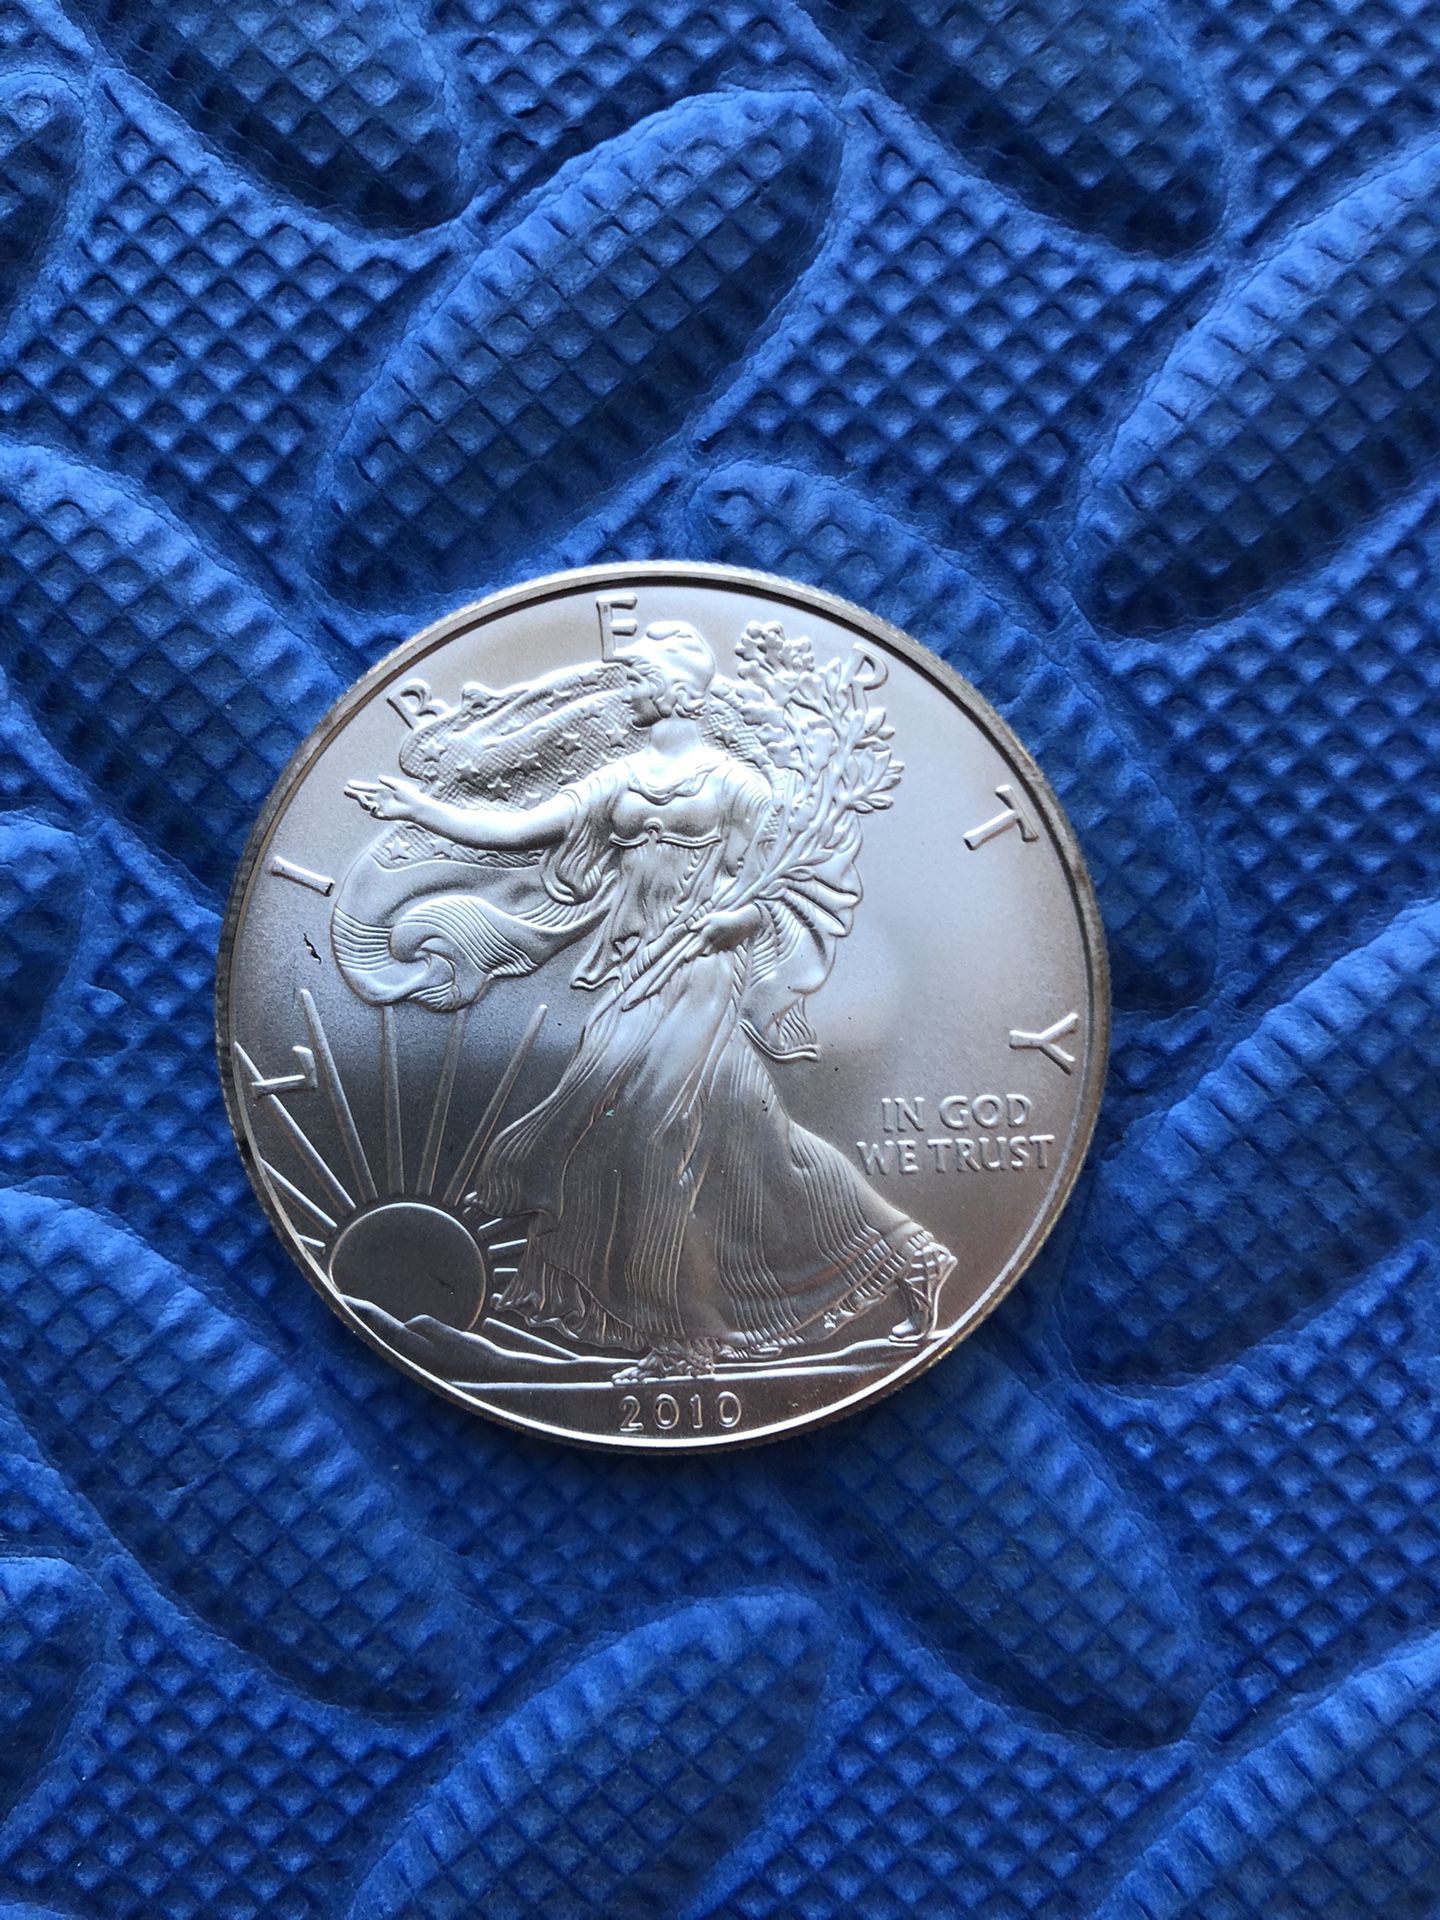 New Pure Silver 1oz Eagle Liberty Coin